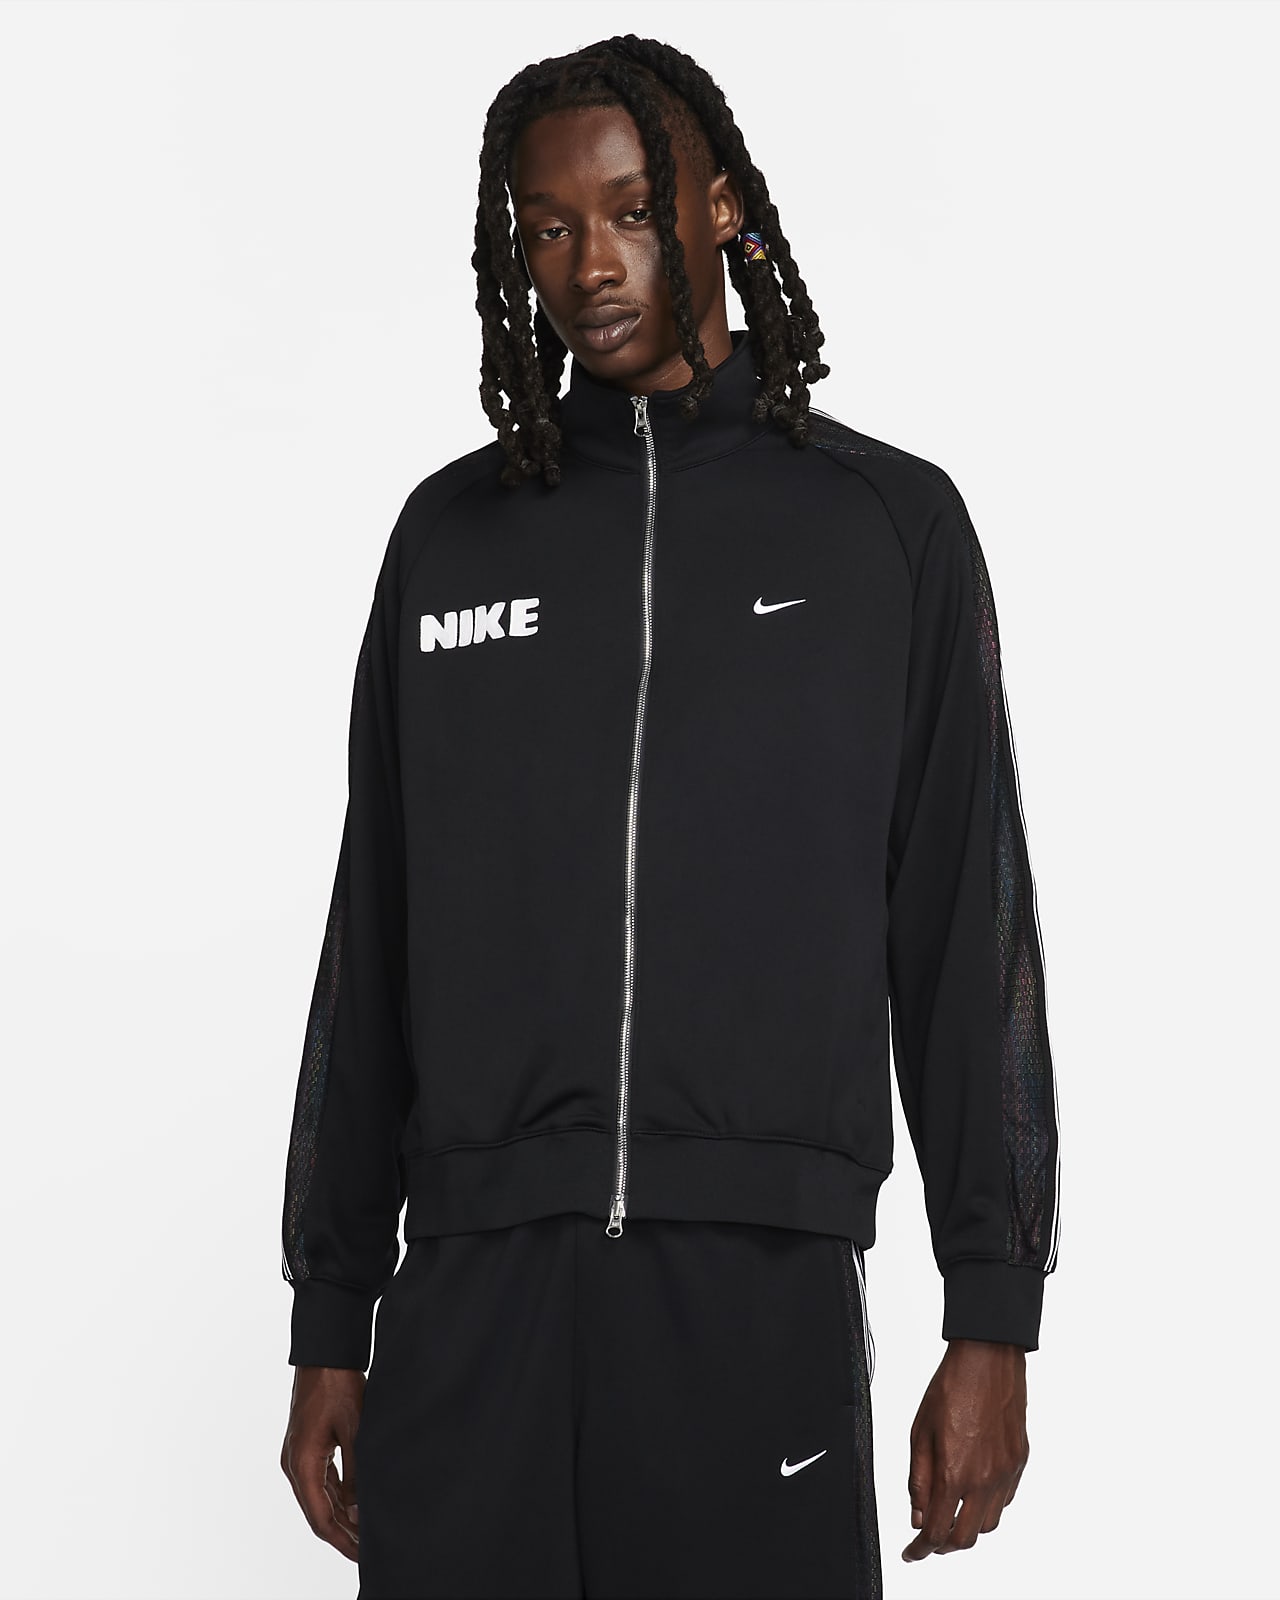 Amazon.com: Nike USA Jacket Mens (S) : Sports & Outdoors